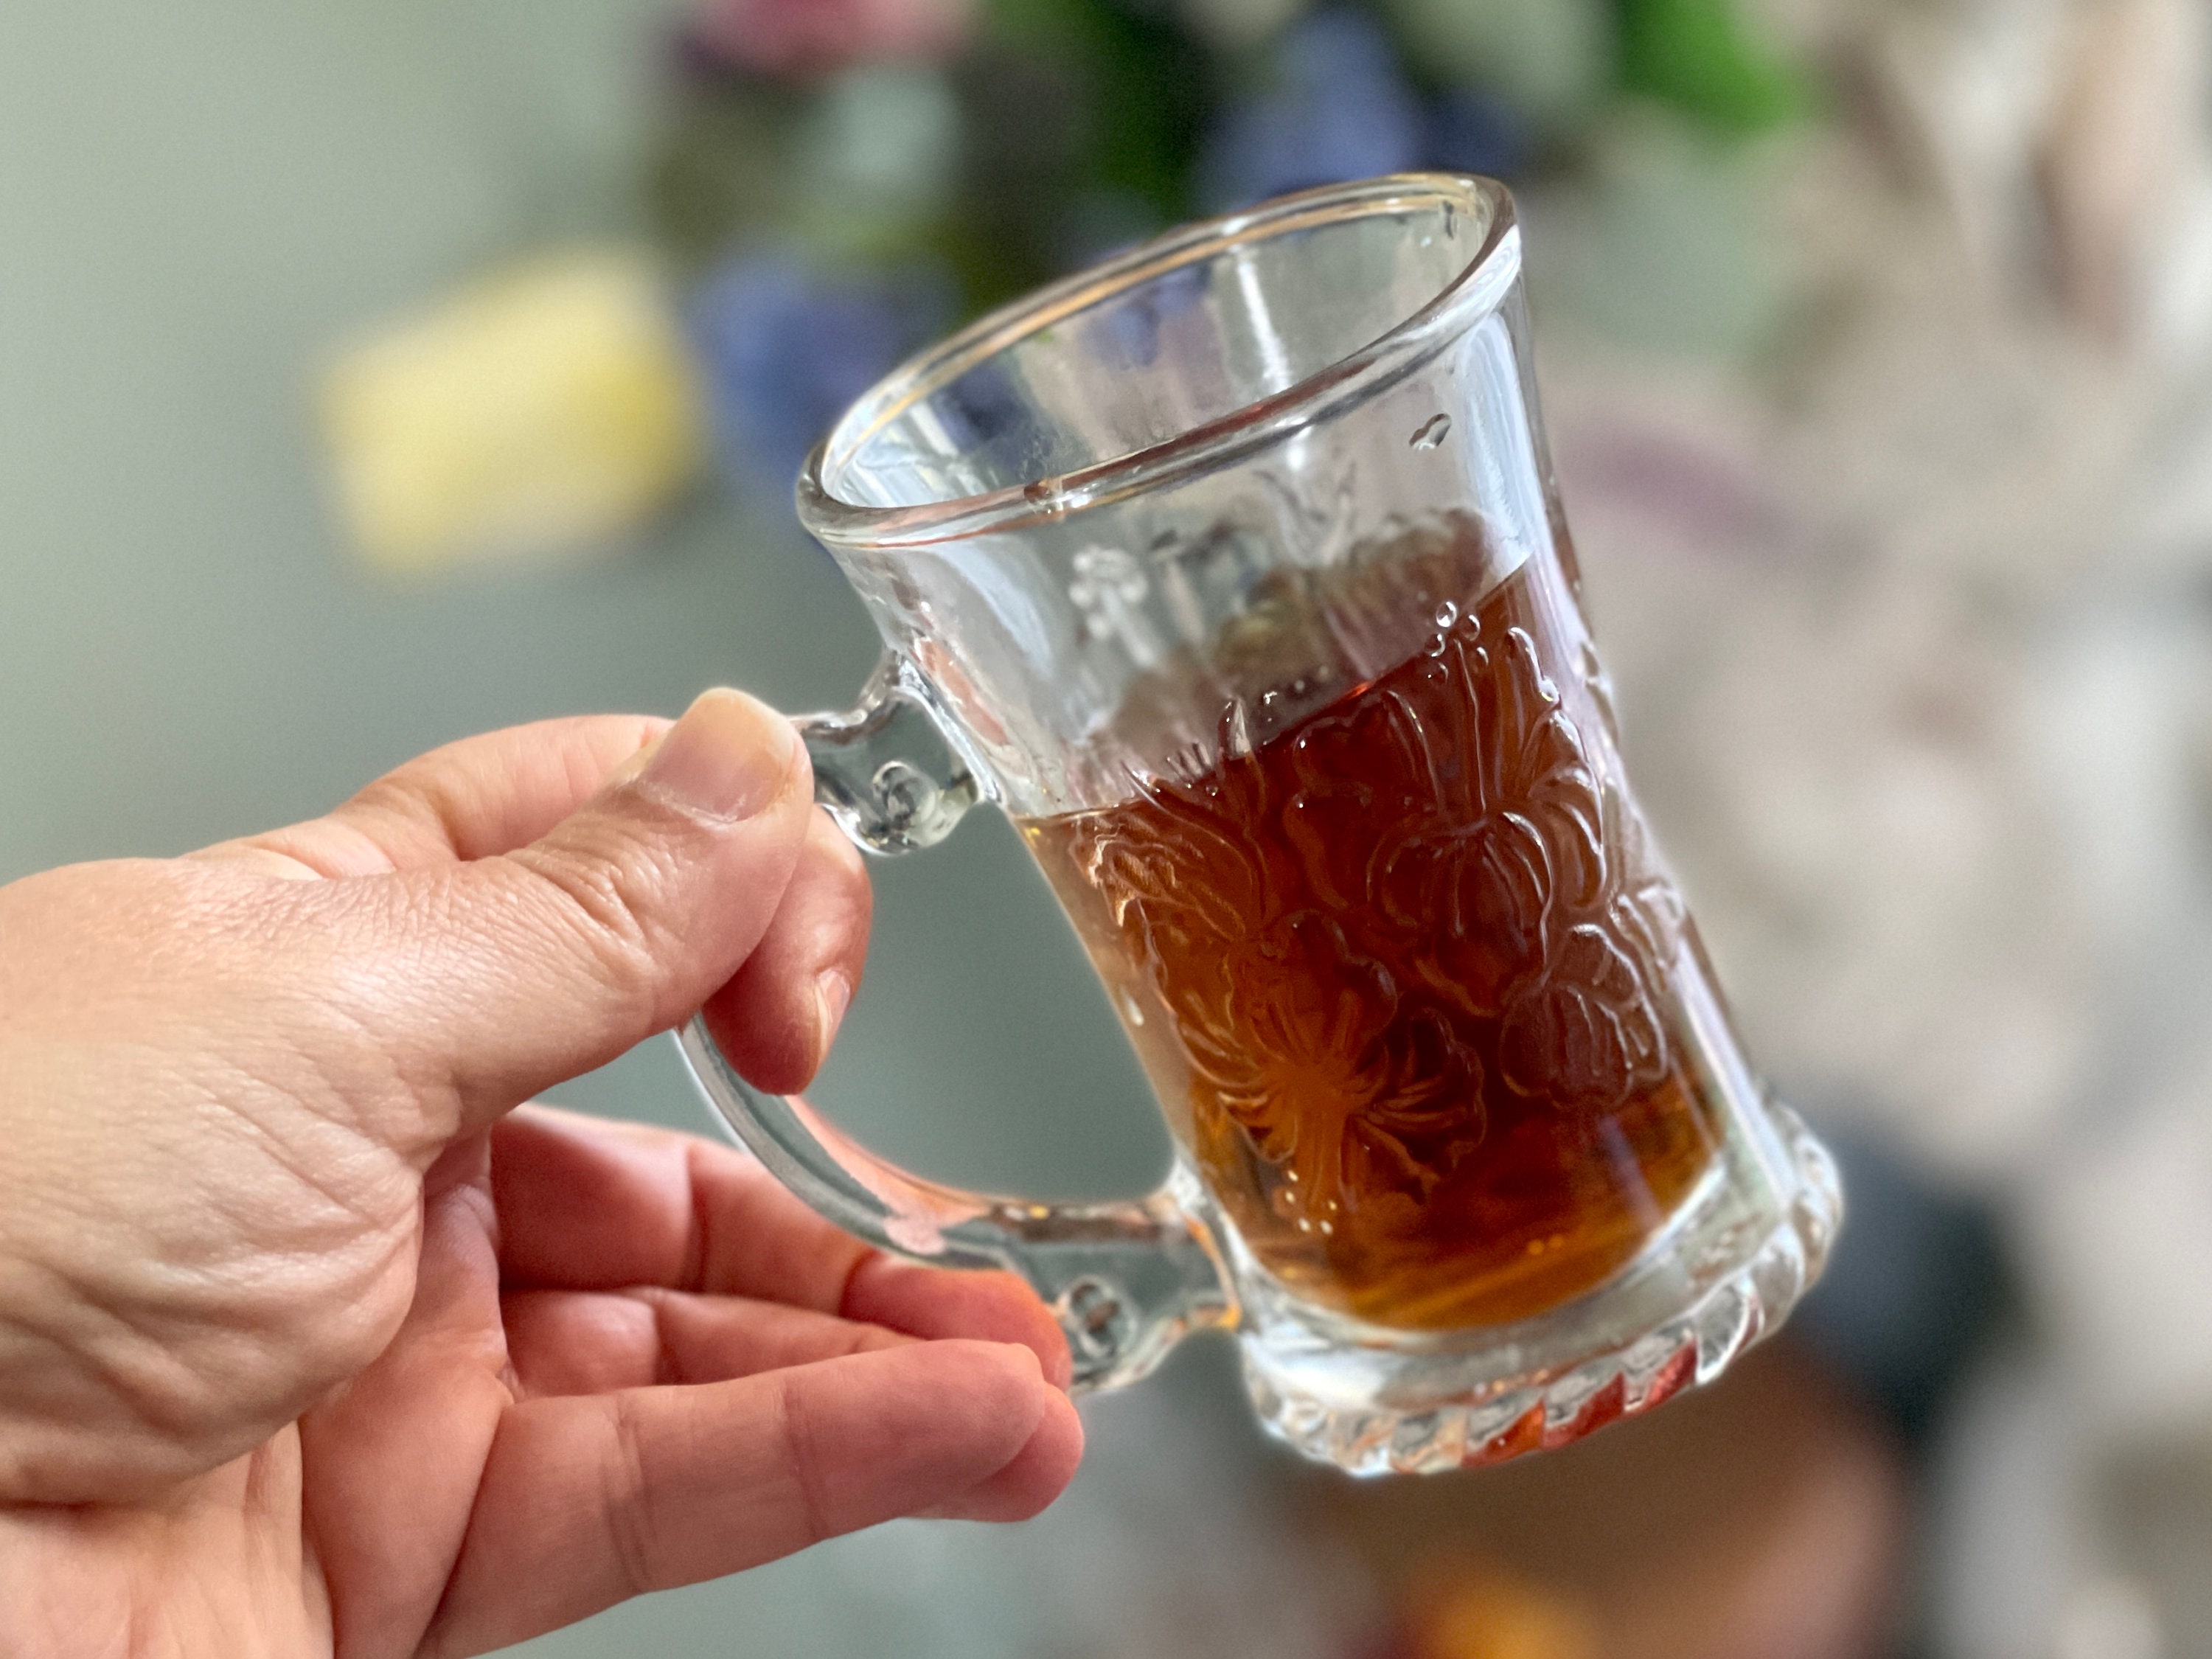 Hibiscus Flower Crystal Glass Tea Cup Set of 6 Turkish Tea Cups